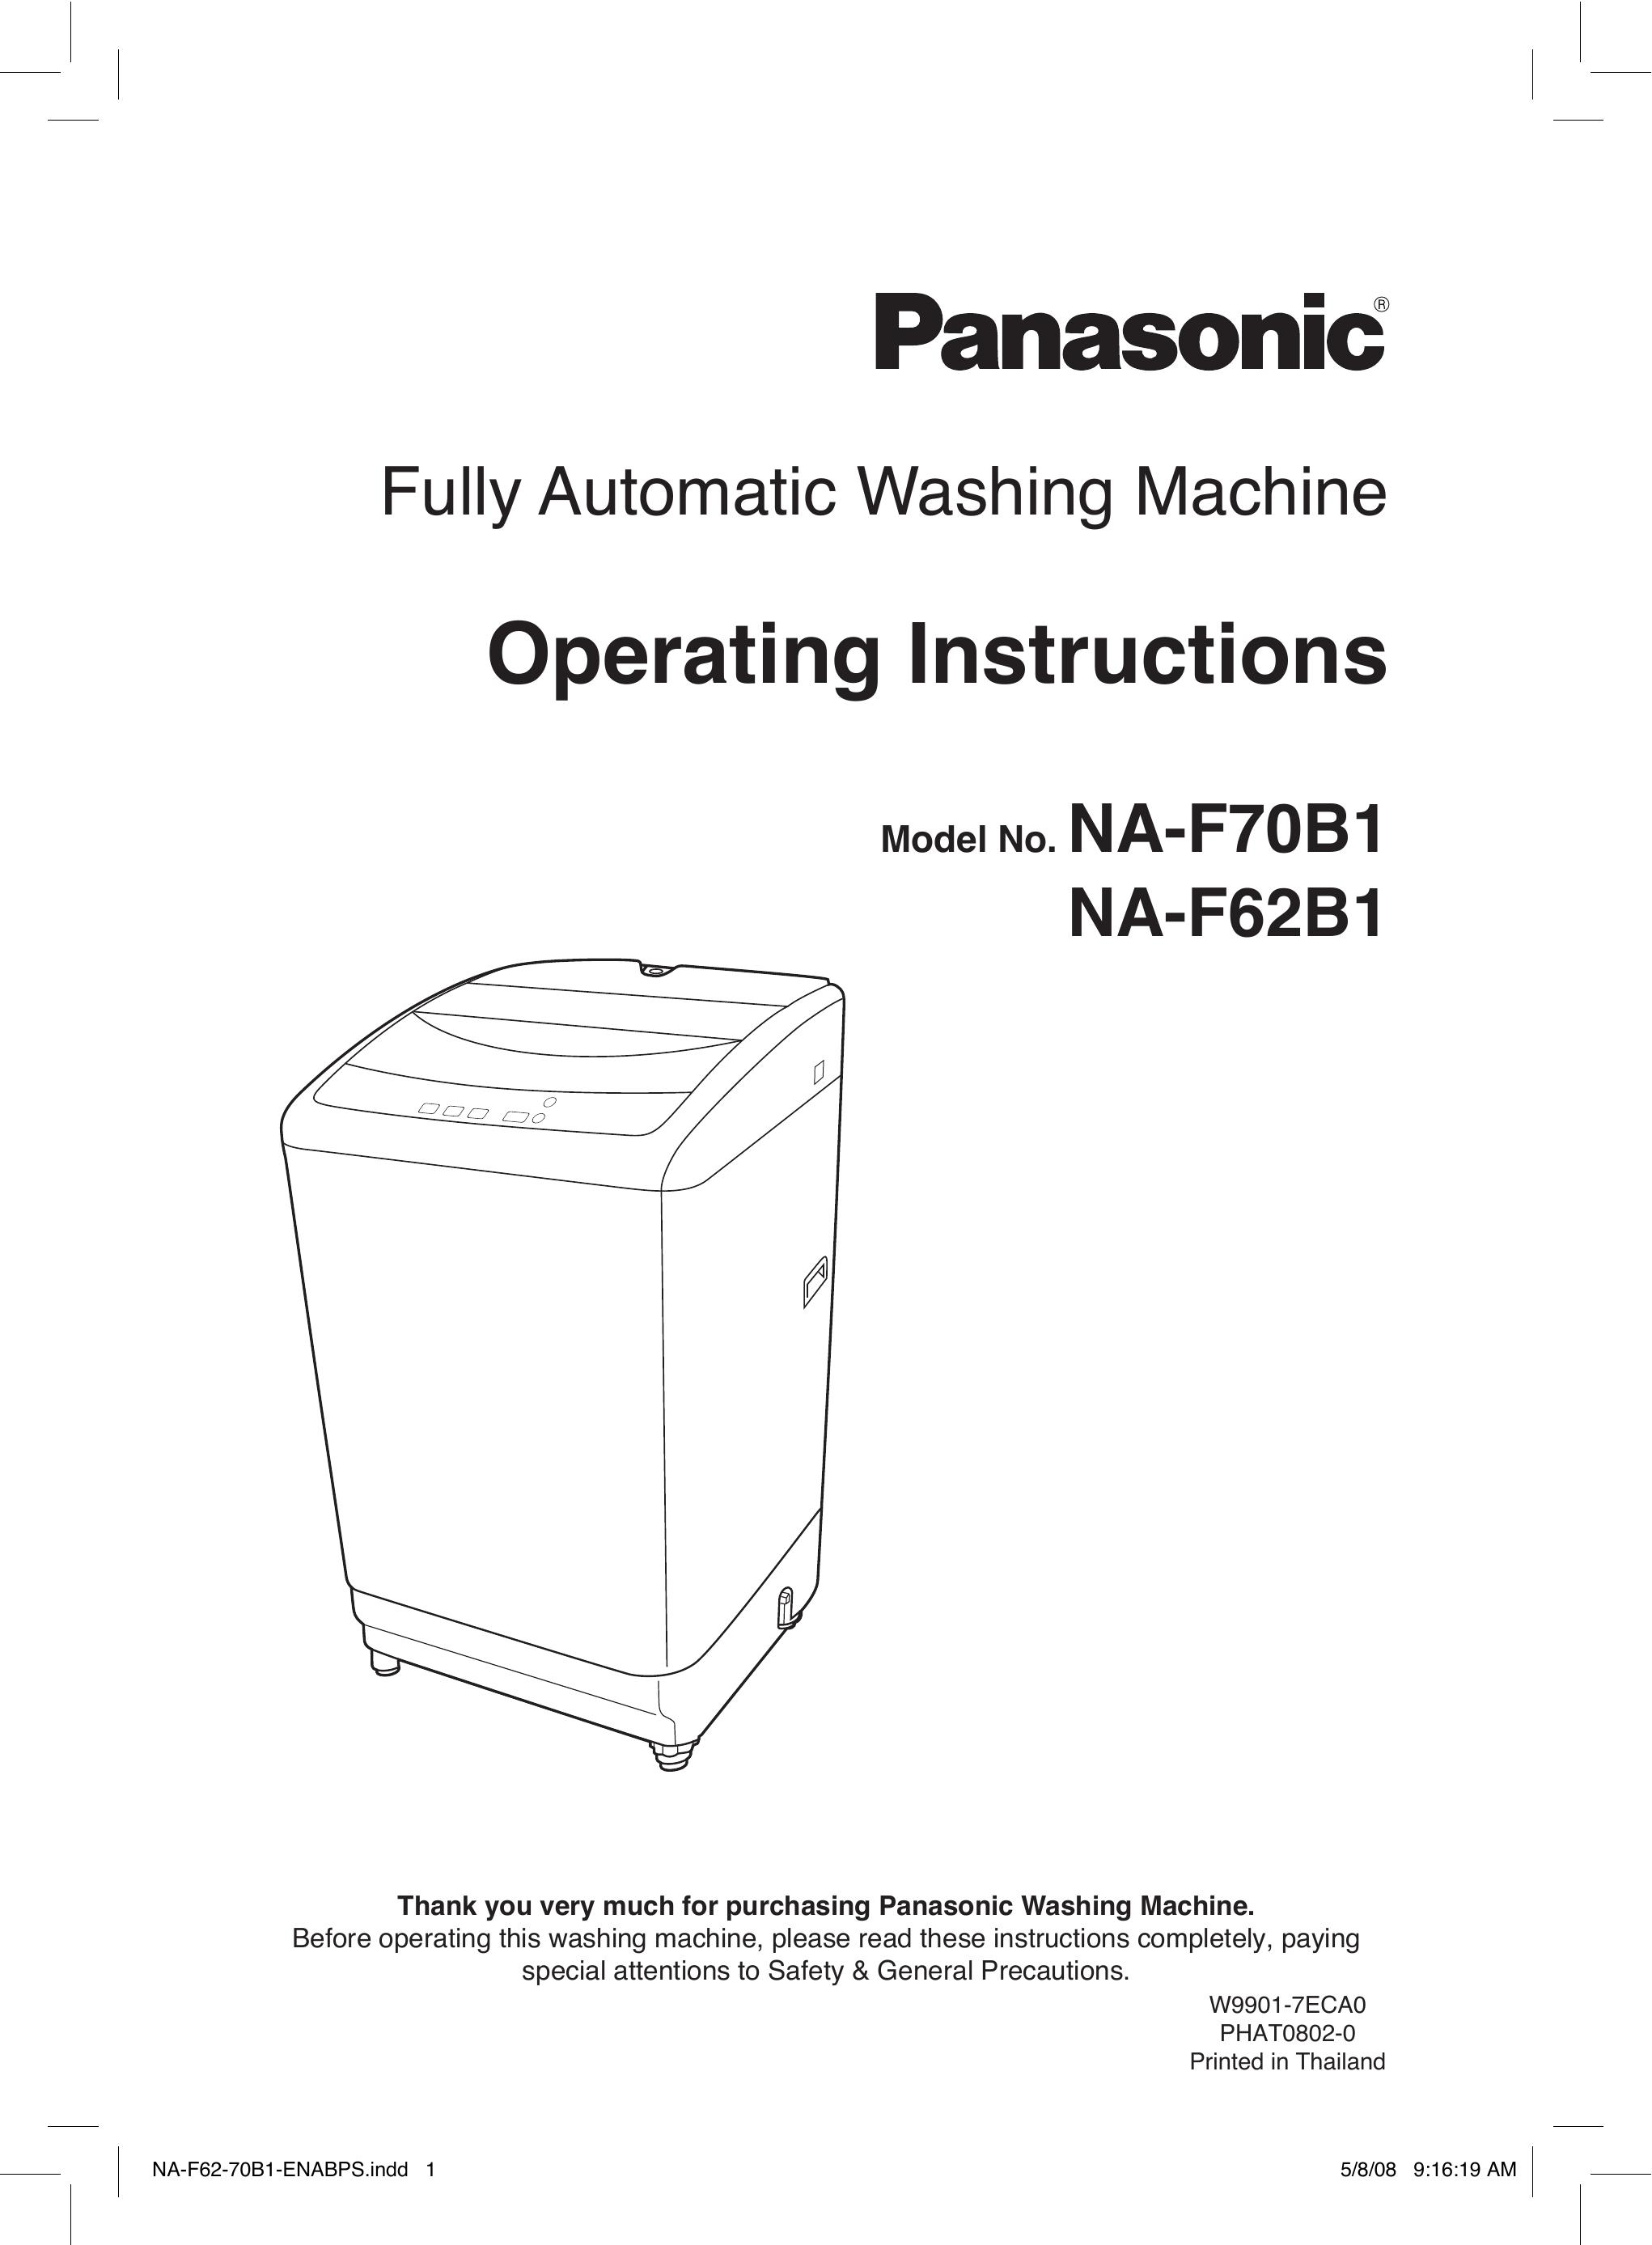 Panasonic NA-F70B1 Washer User Manual